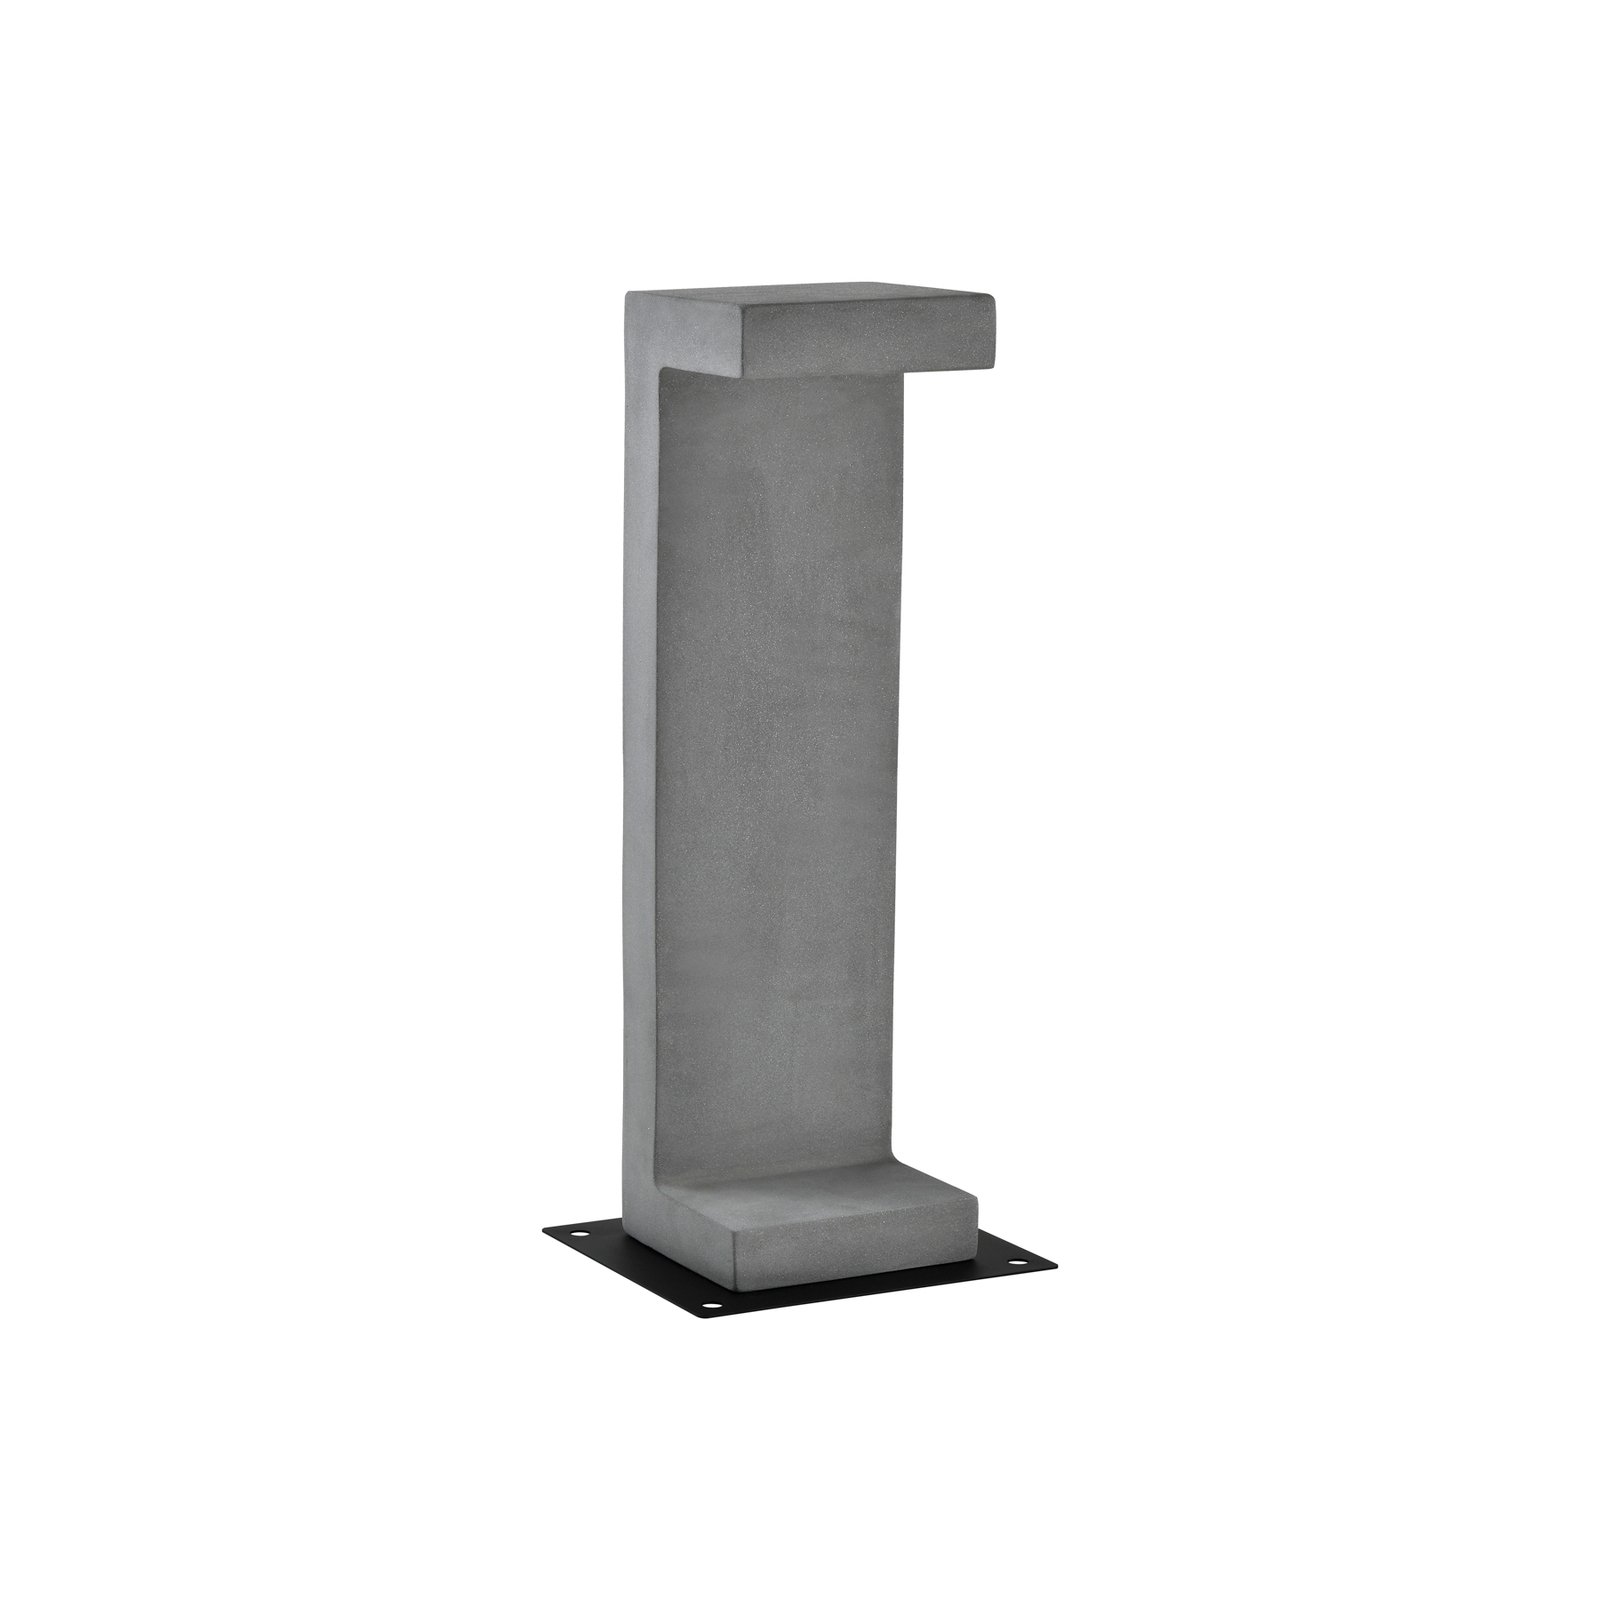 LED pedestal lamp Gary, concrete